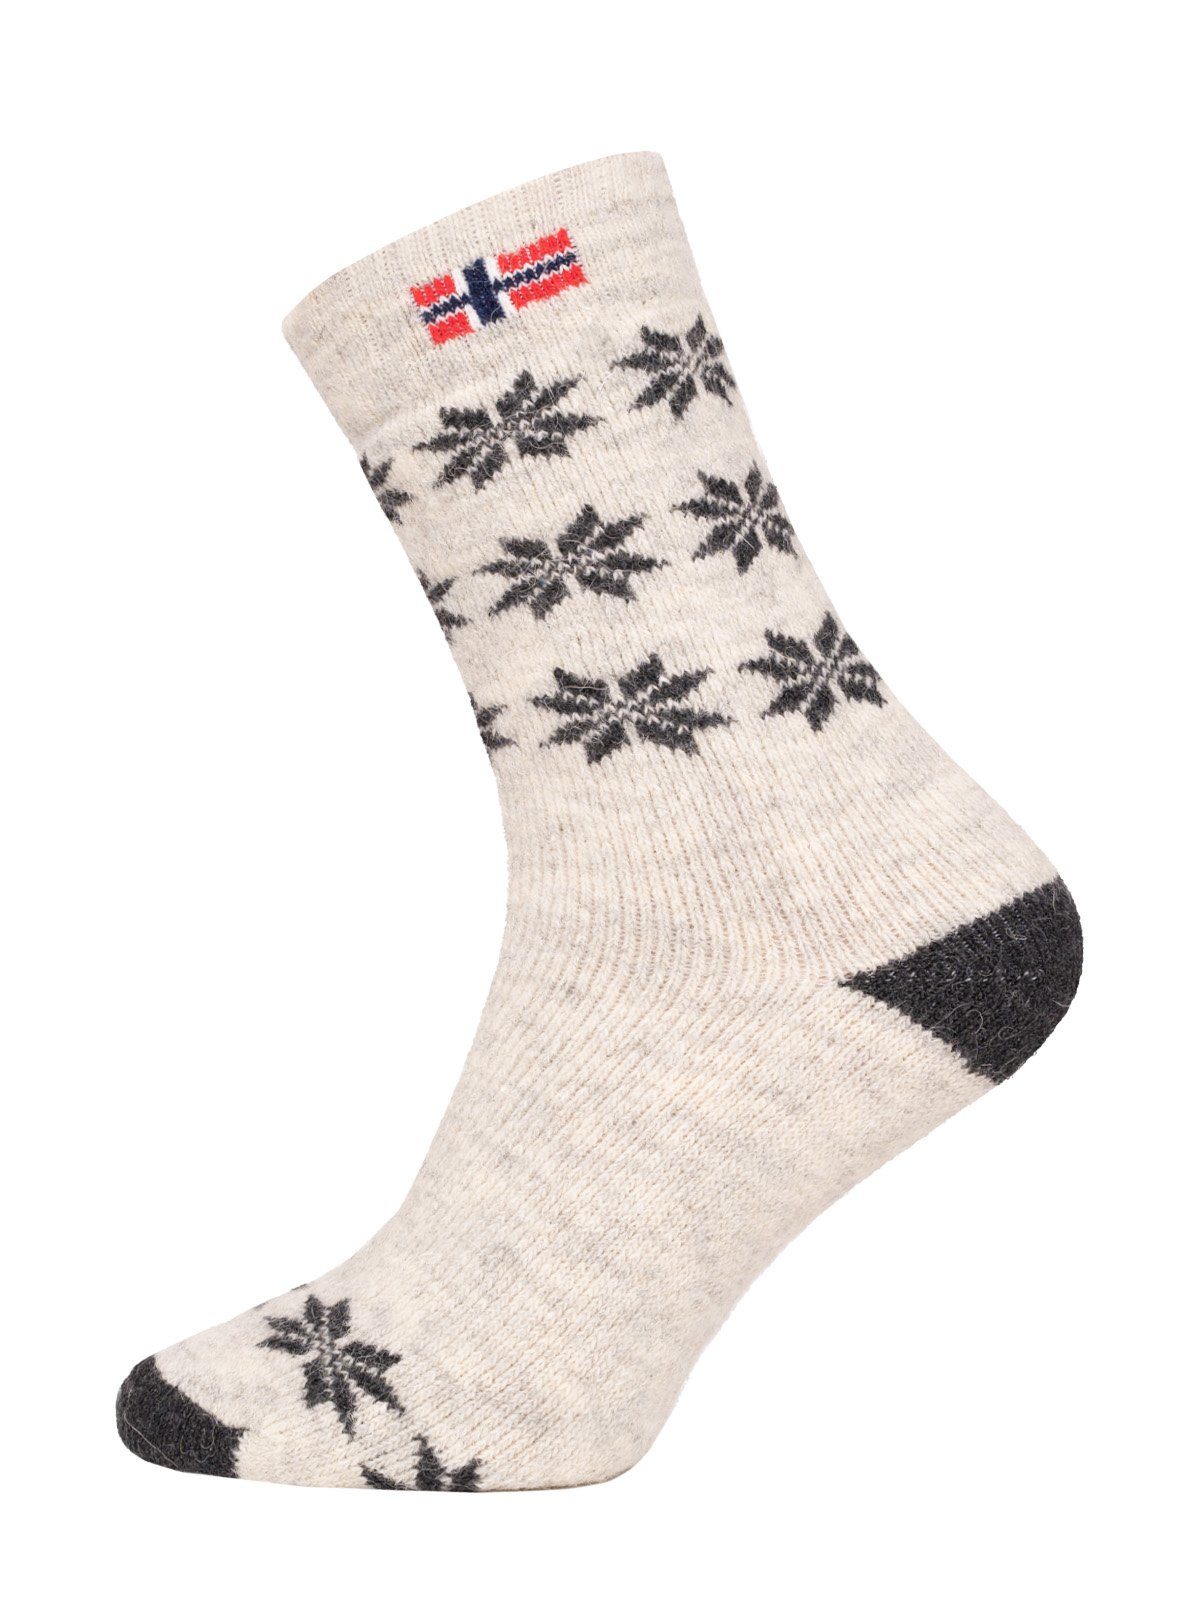 HomeOfSocks Socken Skandinavische Wollsocke "Snowflake Norwegen" Nordic Kuschelsocken Dicke Socken Hyggelig Warm Hoher 80% Wollanteil Norwegischem Design Natur